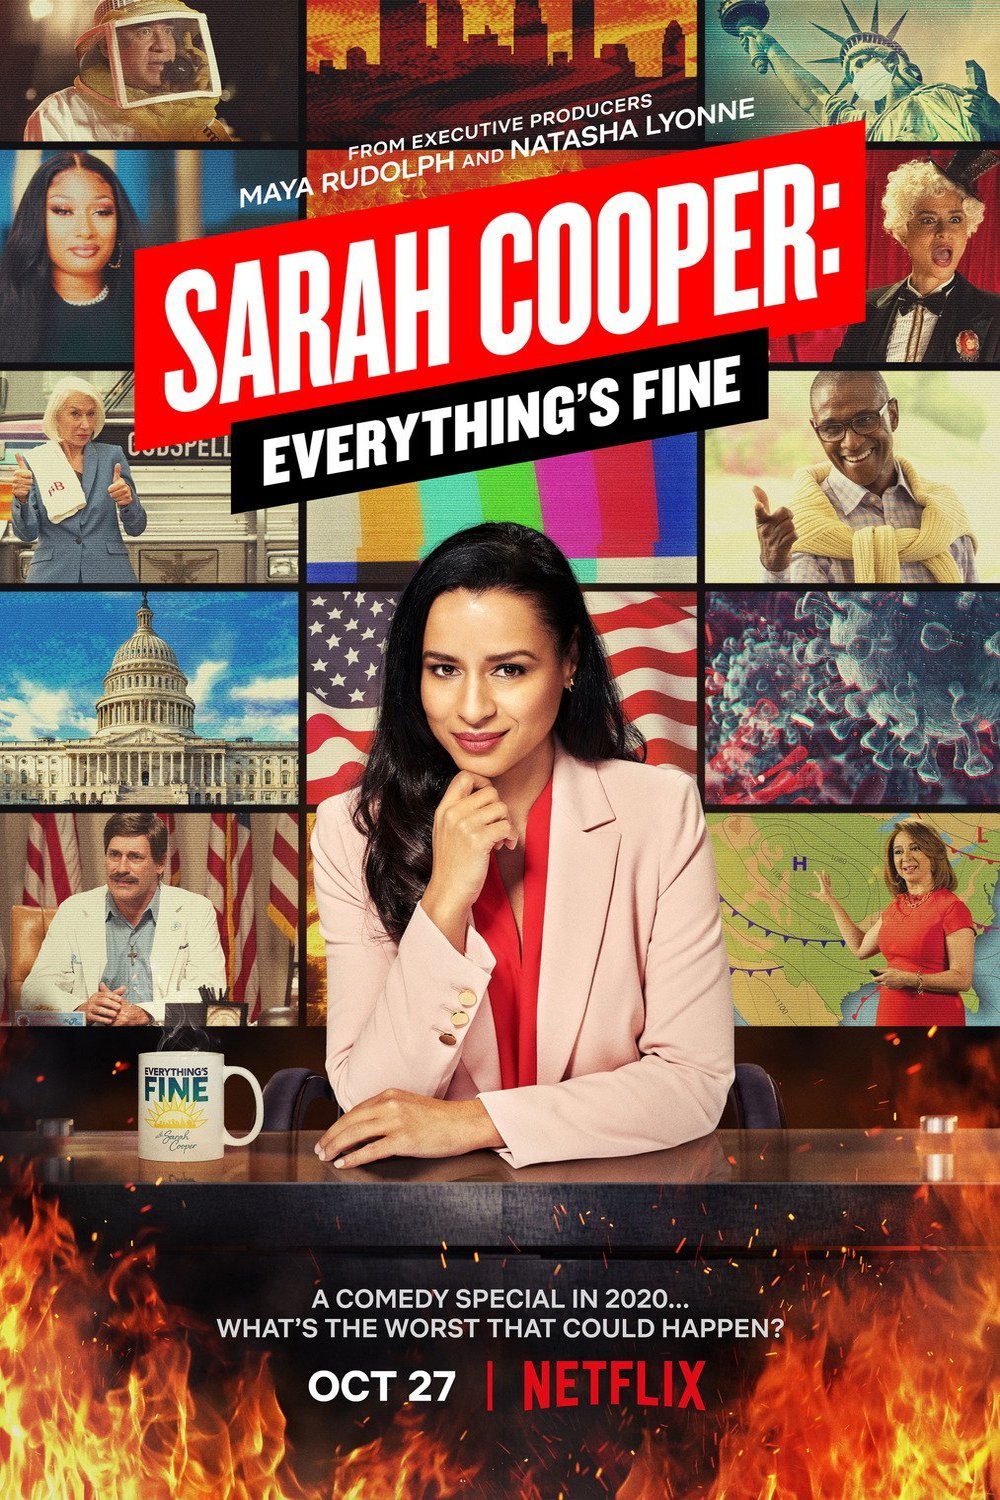 L'affiche originale du film Sarah Cooper: Everything's Fine en 